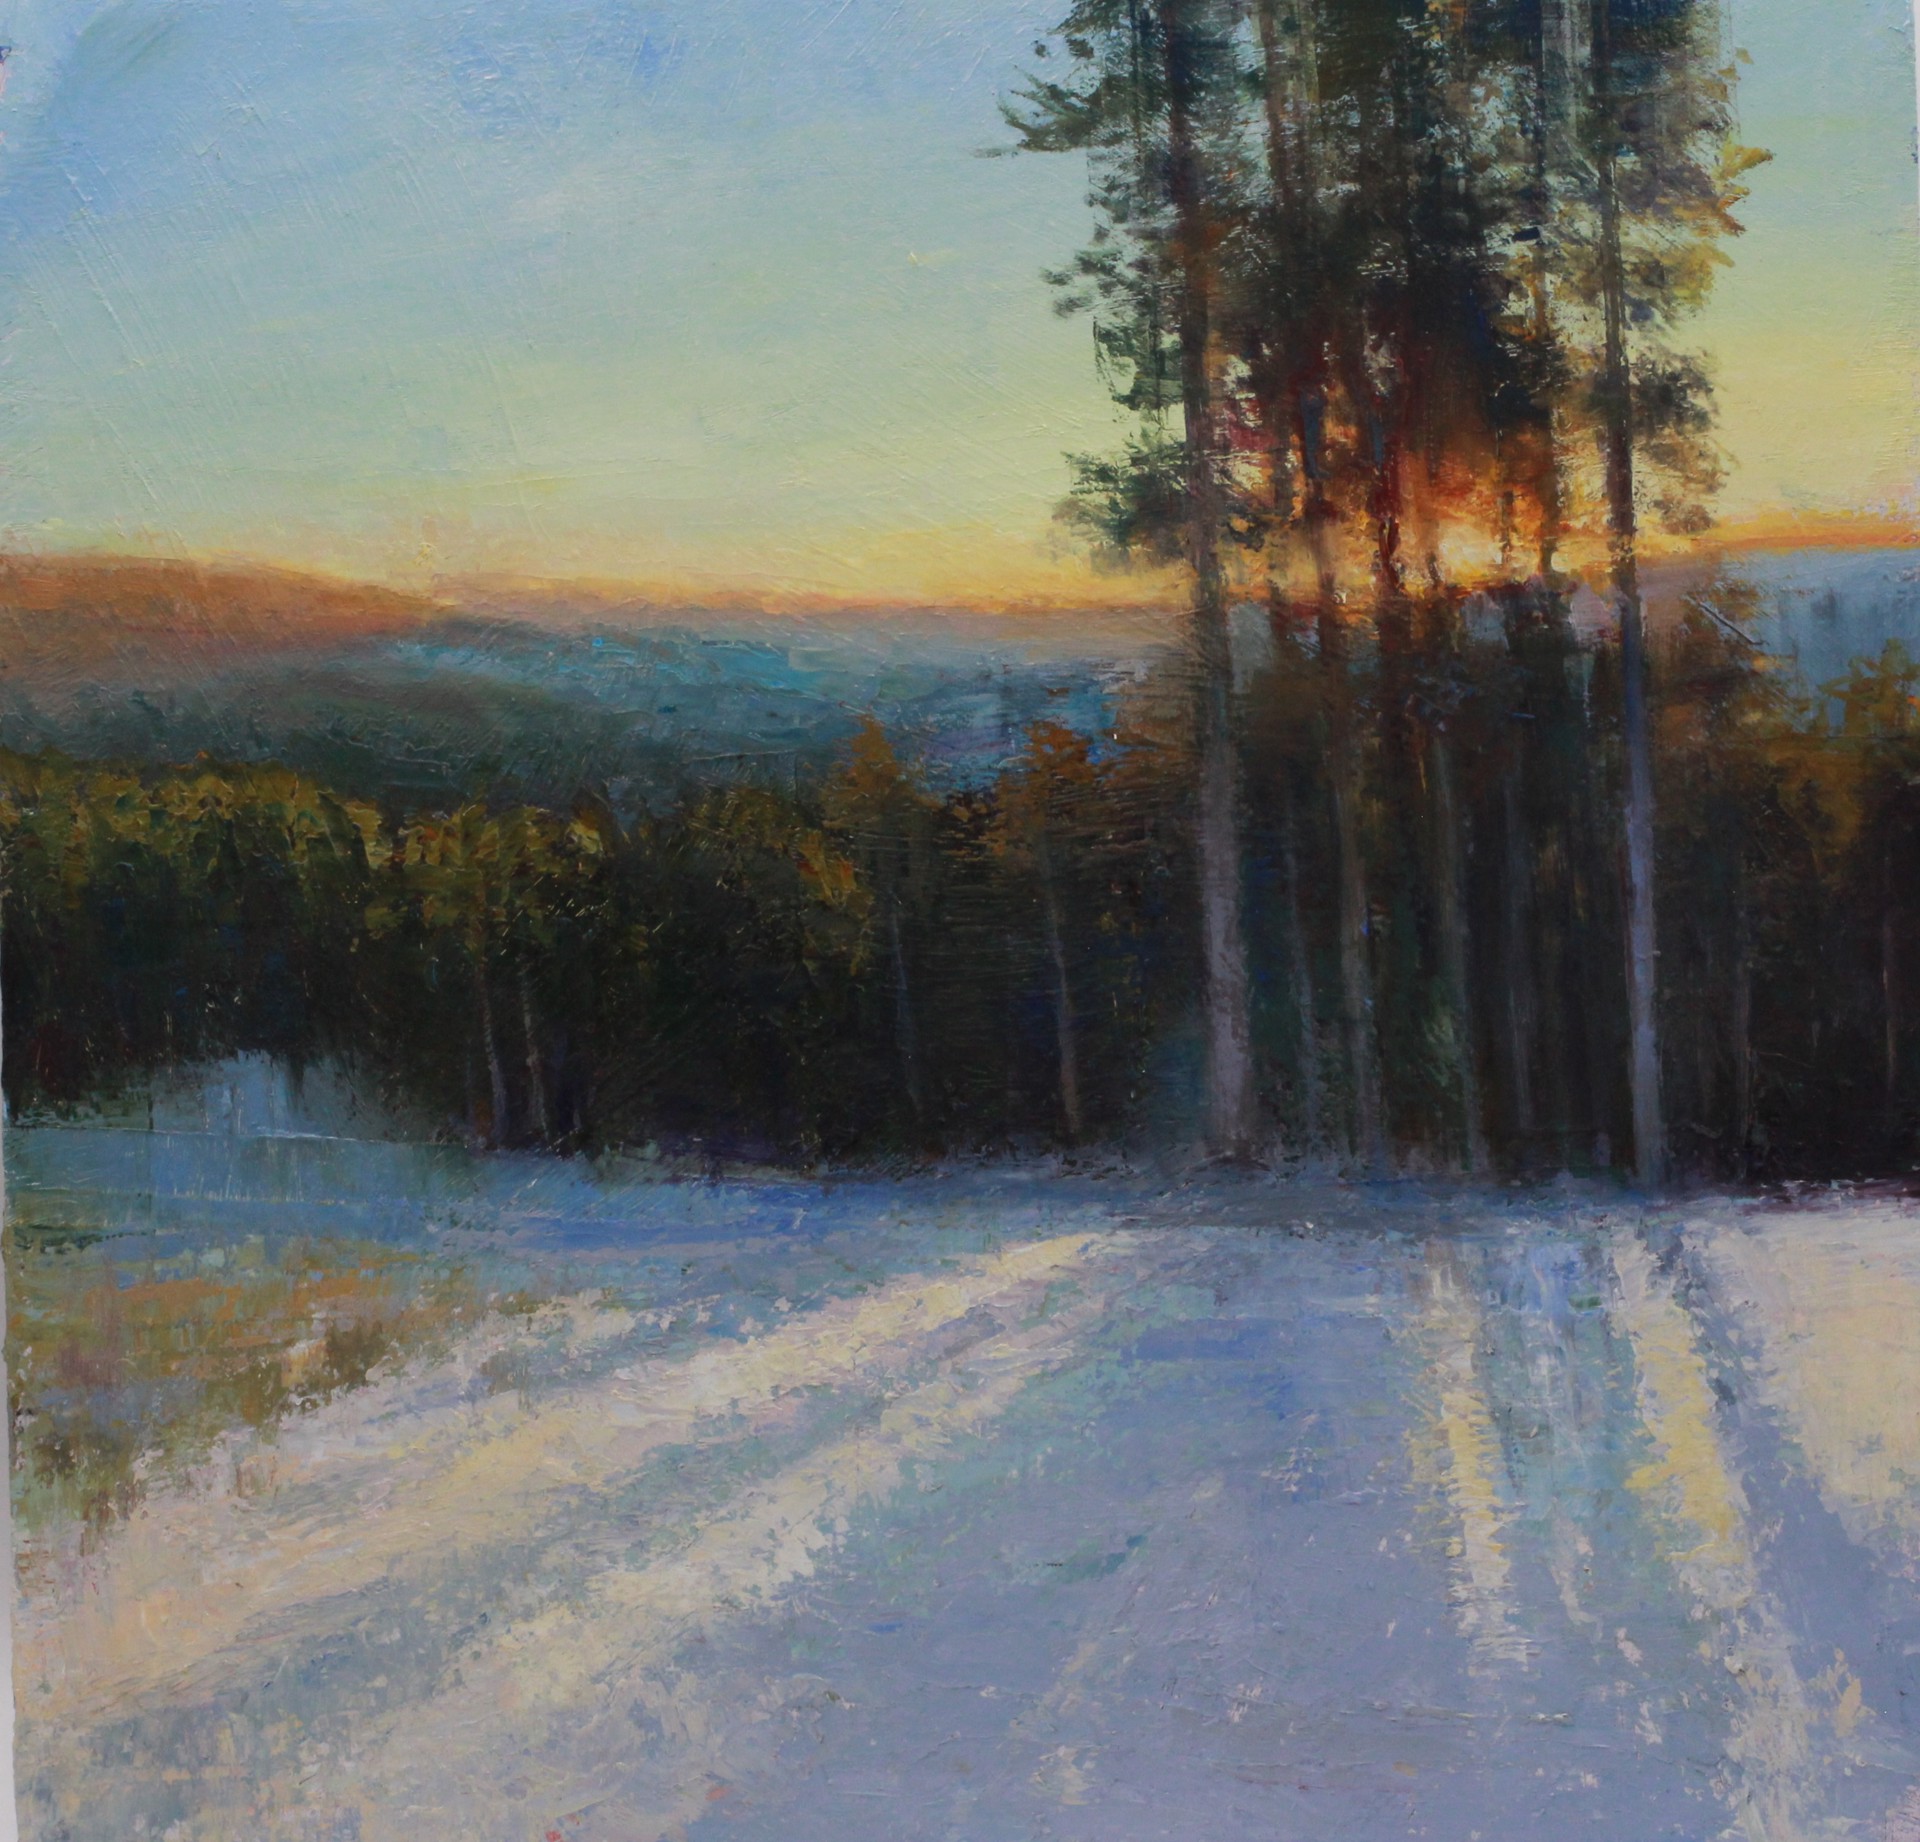 Butte Dawn Study by P.A. Jones